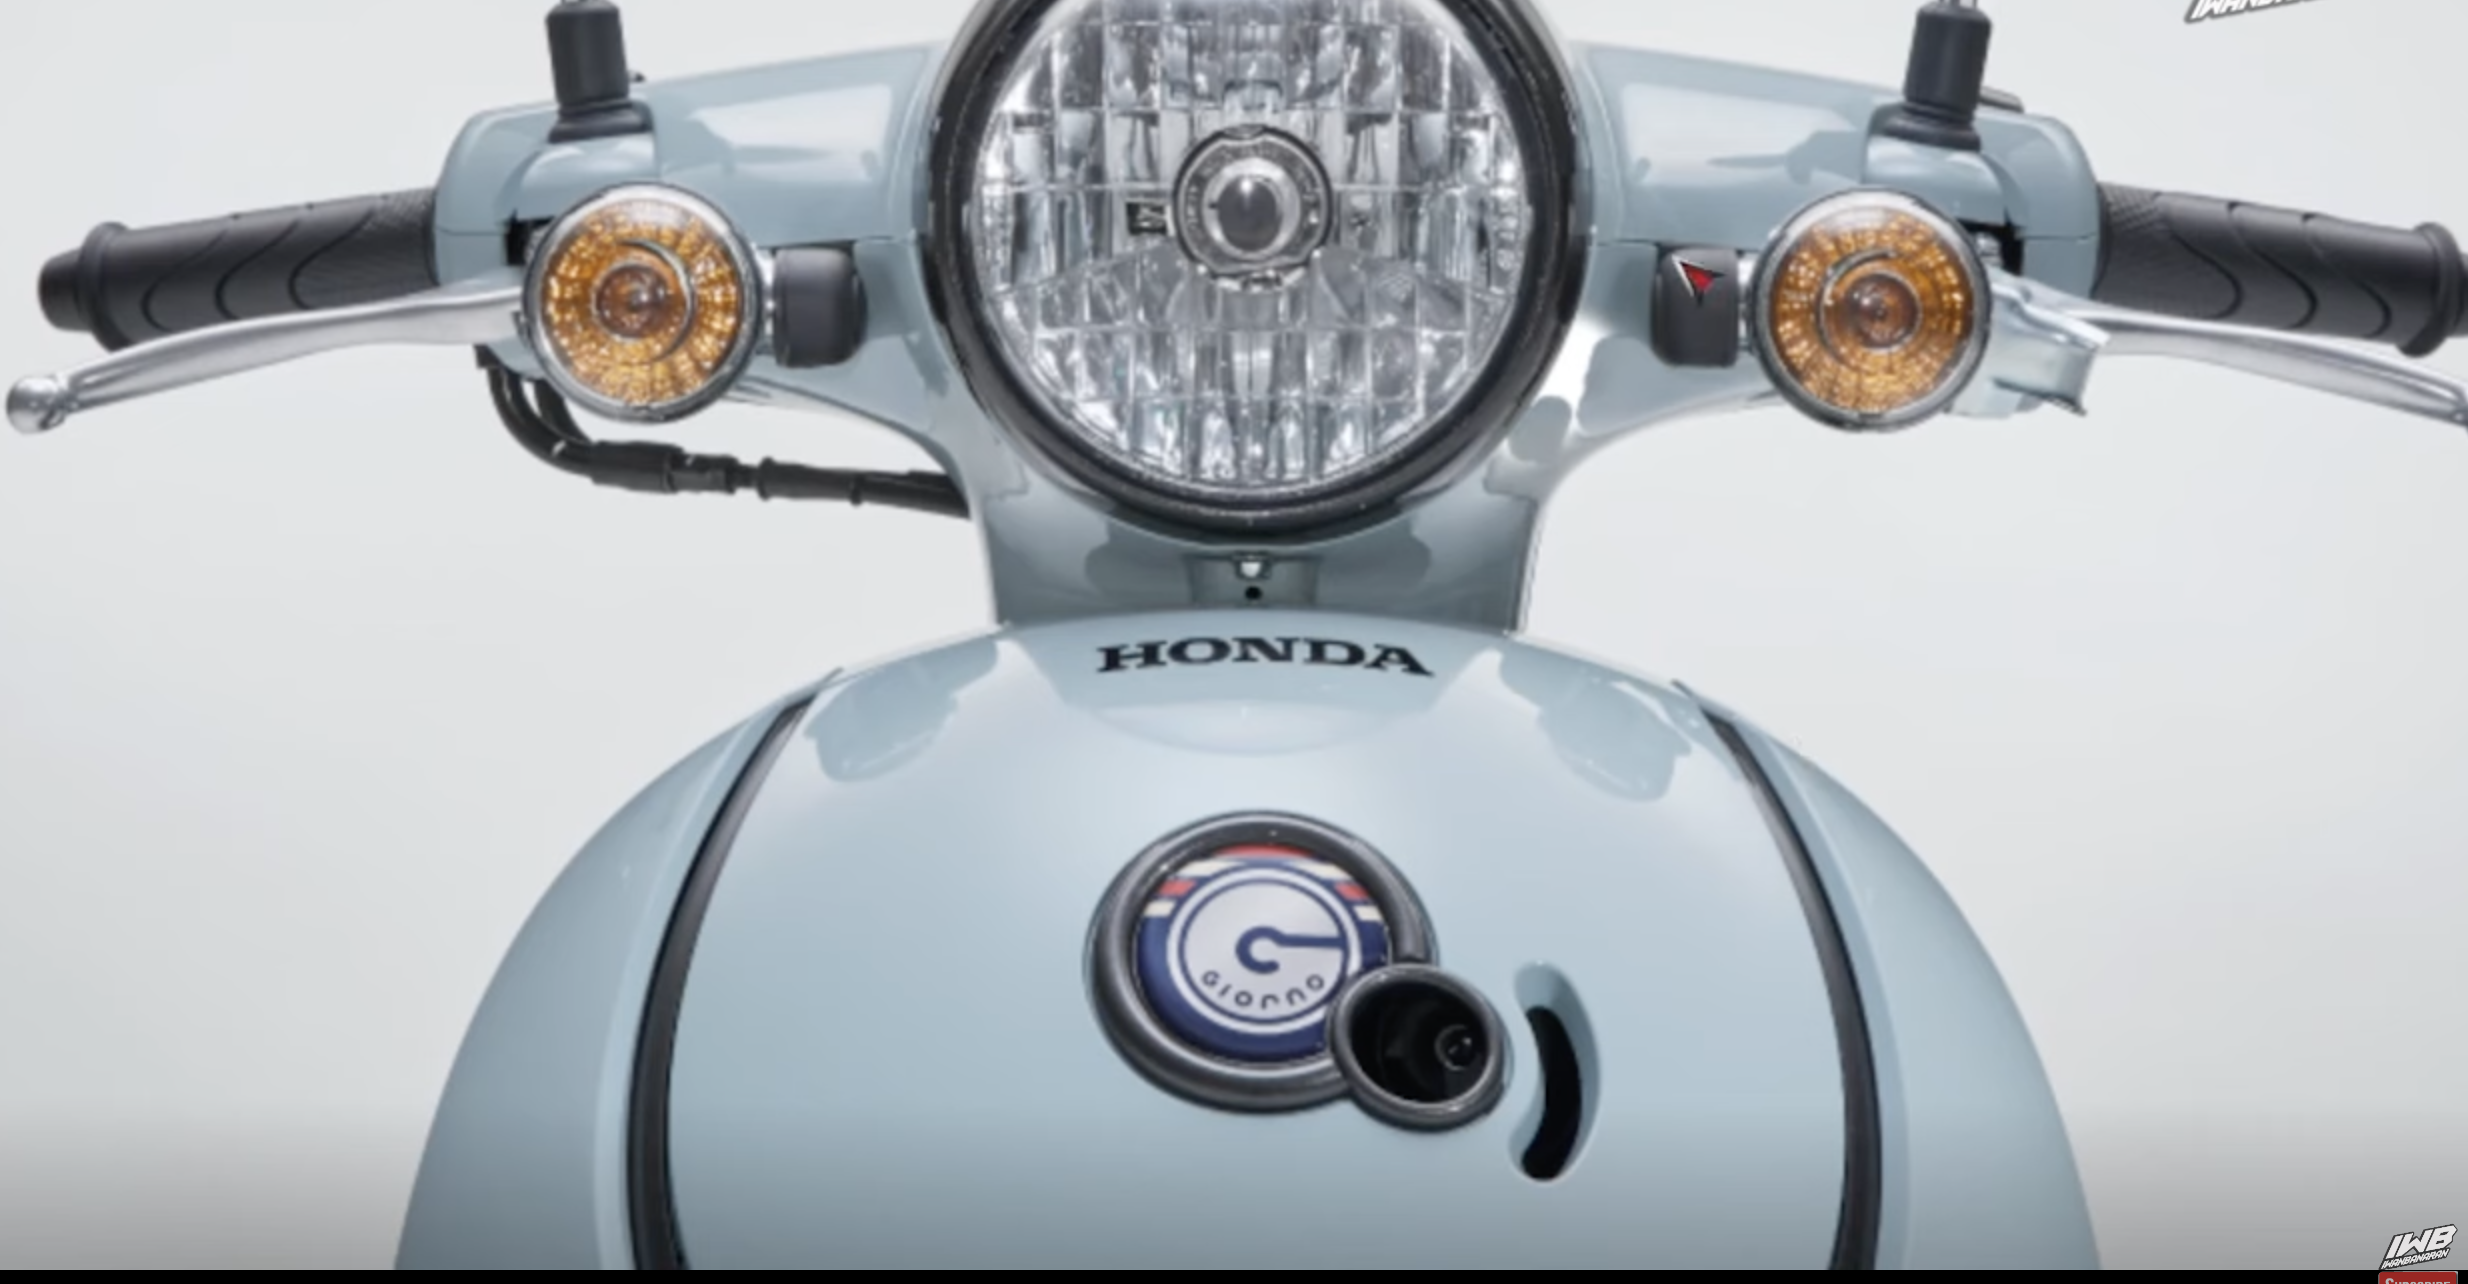 Honda Stylo 160 Bakal Mengadopsi Giorno, Bukan Scoopy Mesin Pakai PCX 